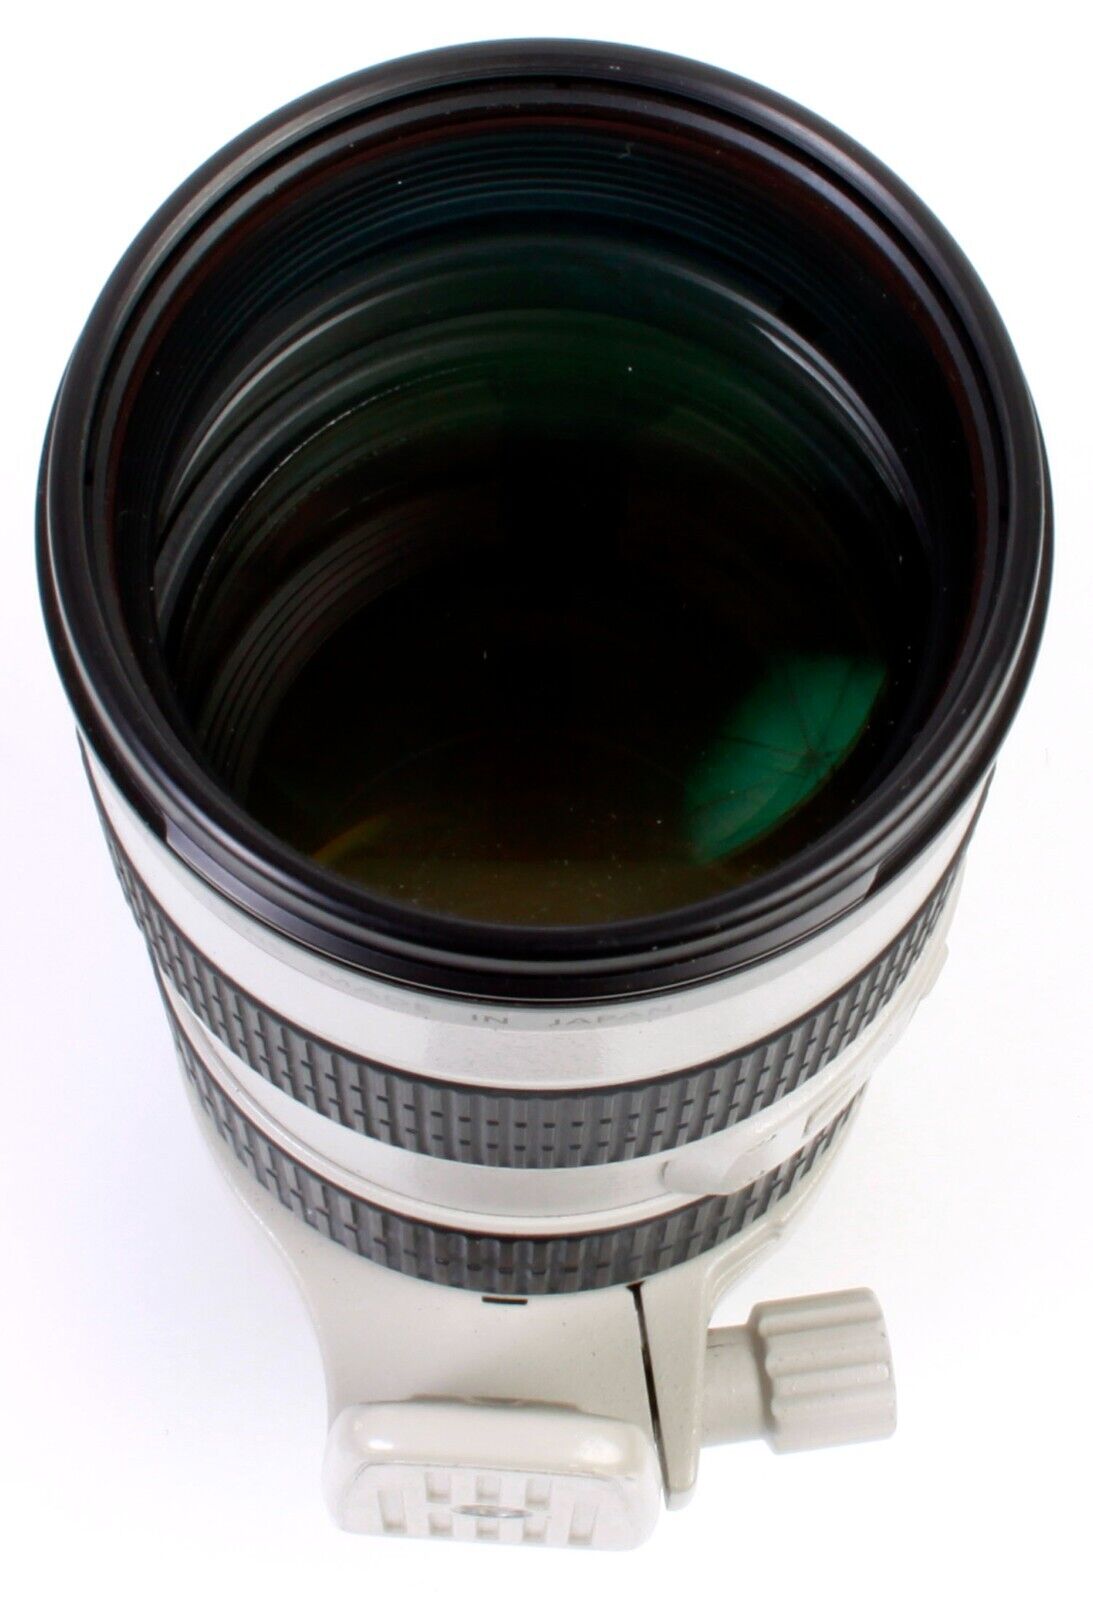 Canon EF 70-200mm f/2.8L IS USM Zoom Lens w/ Tripod Mount, Case, Hood & Box